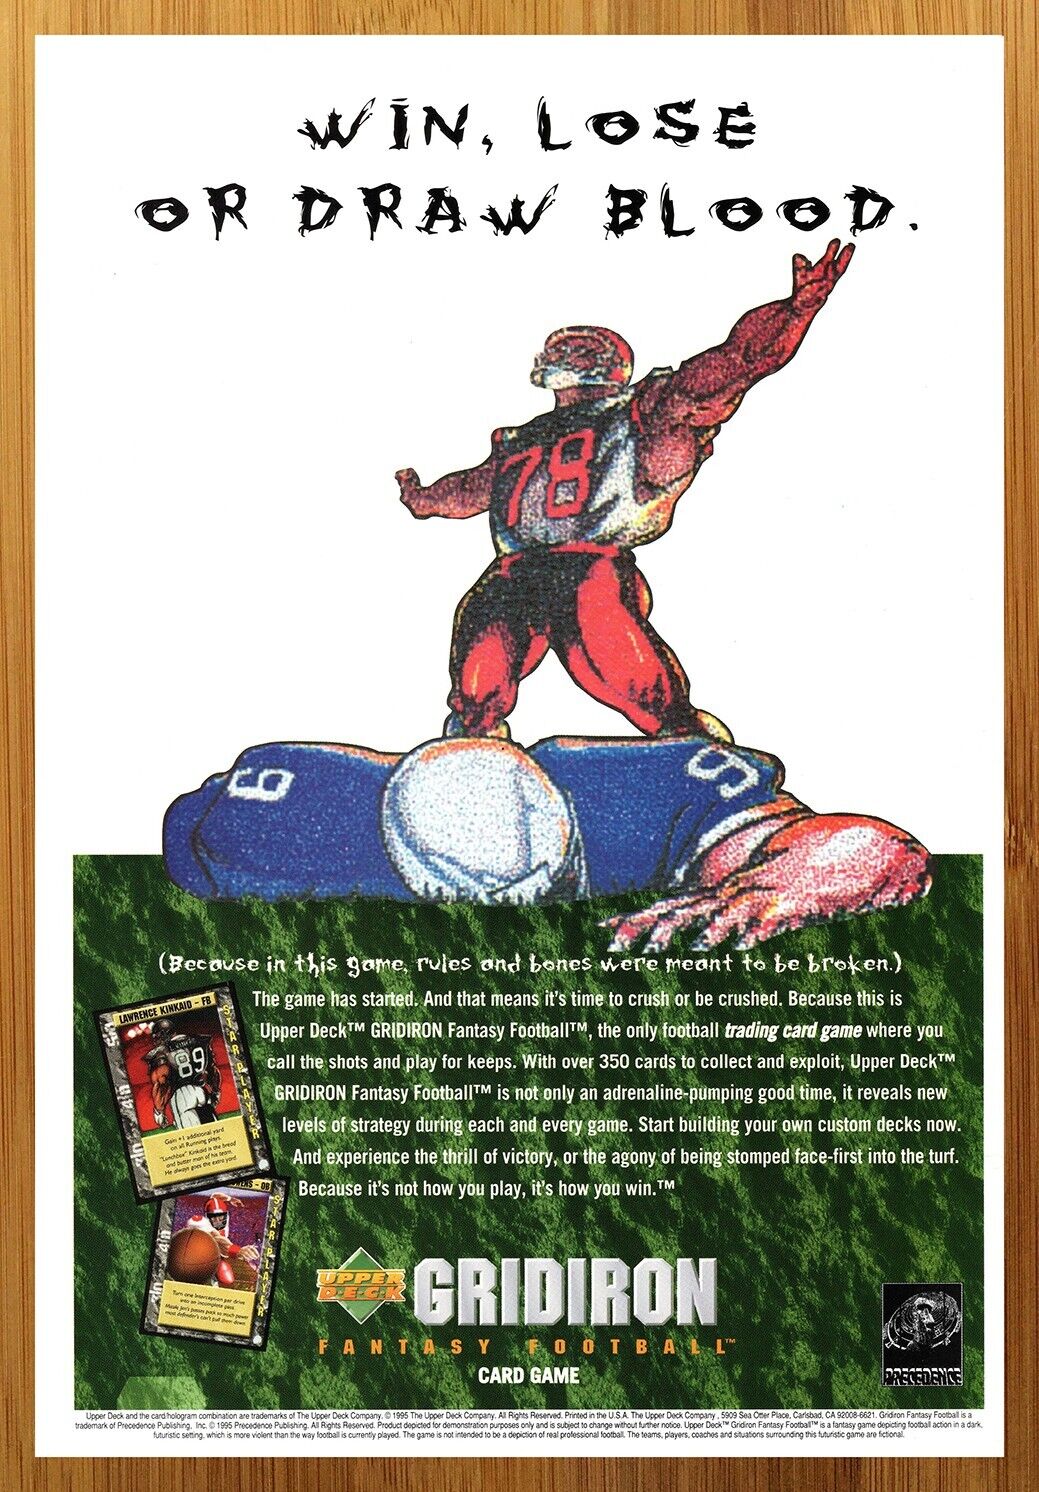 1995 Upper Deck Gridiron Fantasy Football Trading Card Game Print Ad/Poster Art